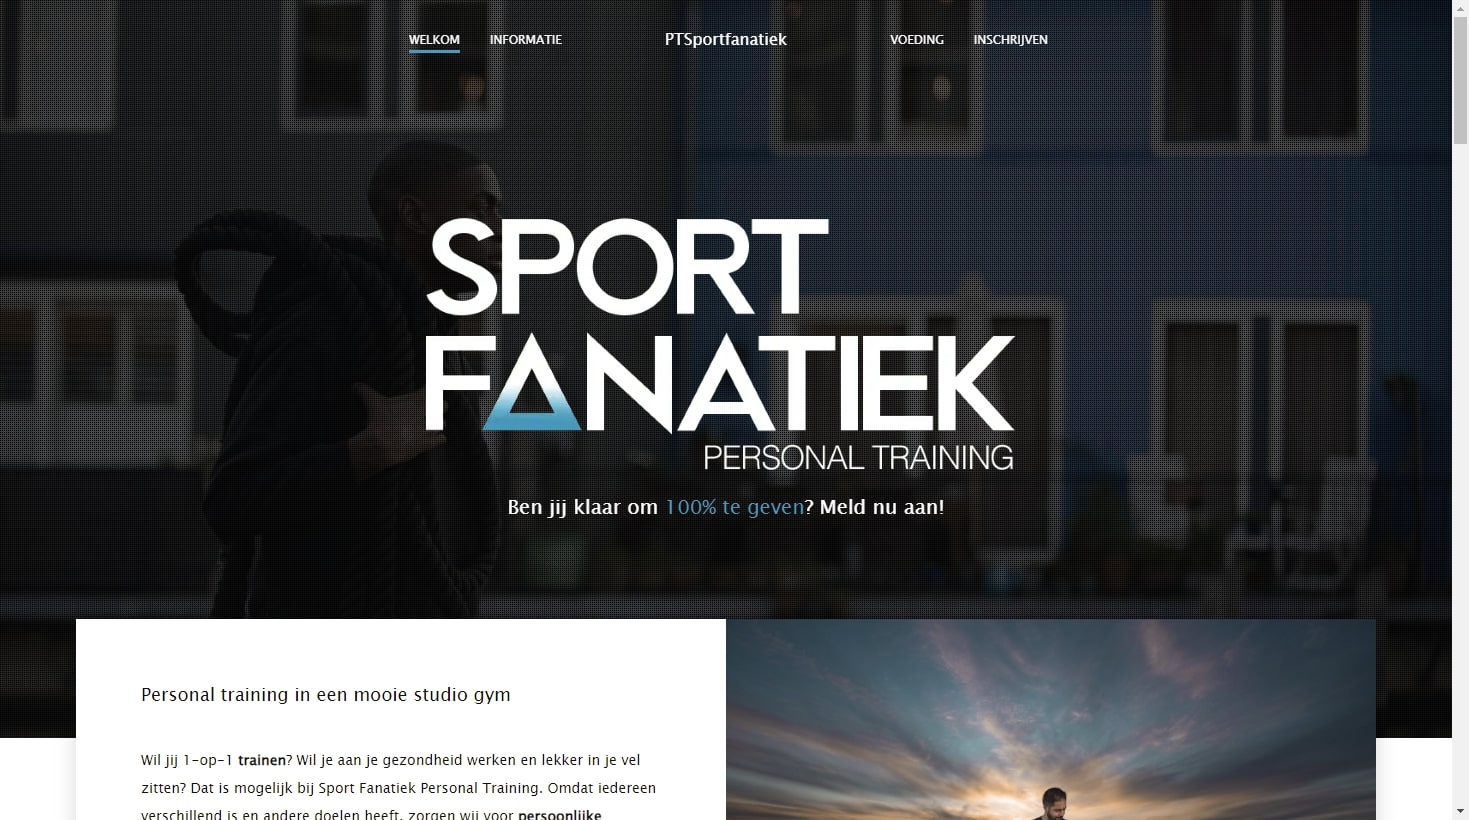 PT Sport Fanatiek - Personal Training